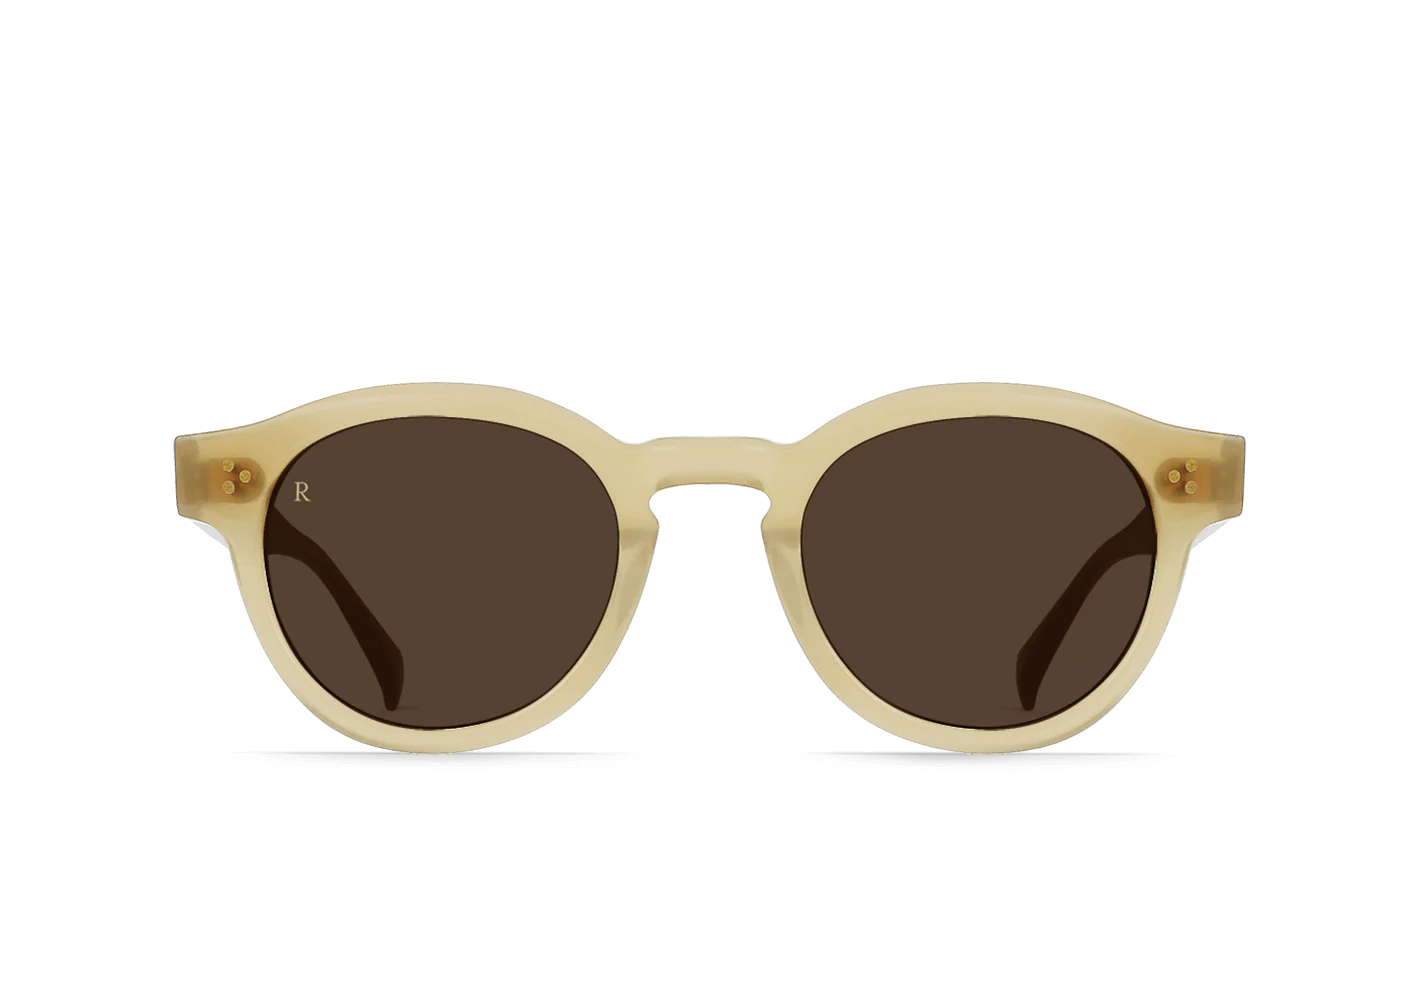 RAEN's Zelti Unisex Round Sunglasses with Villa frames and Vibrant Brown lenses